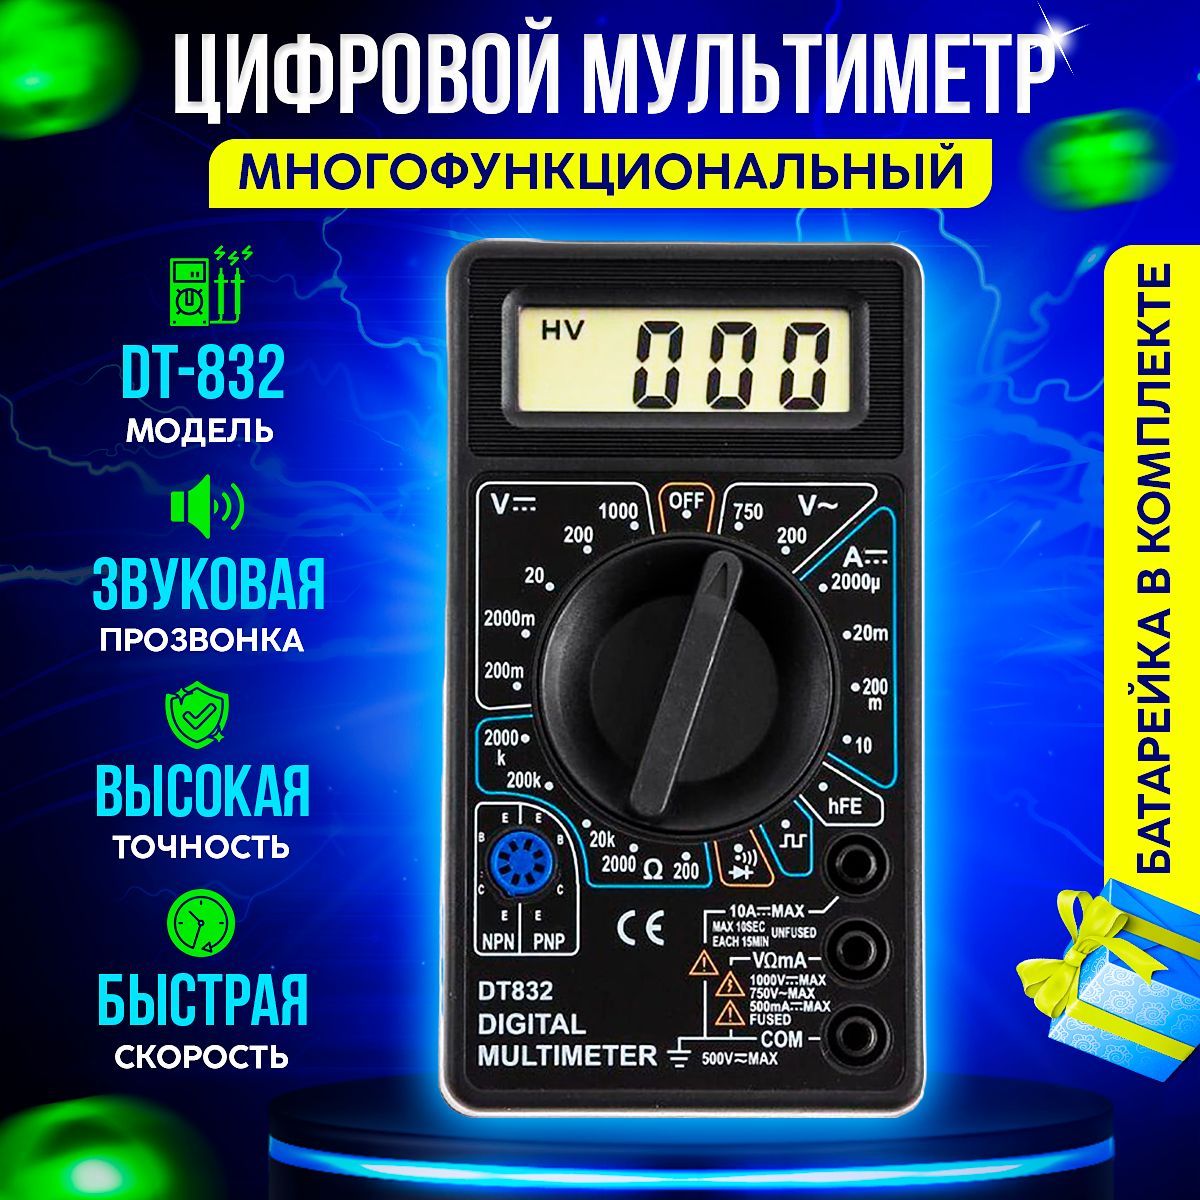 МультиметритестерцифровойспрозвонкойищупамиDT832